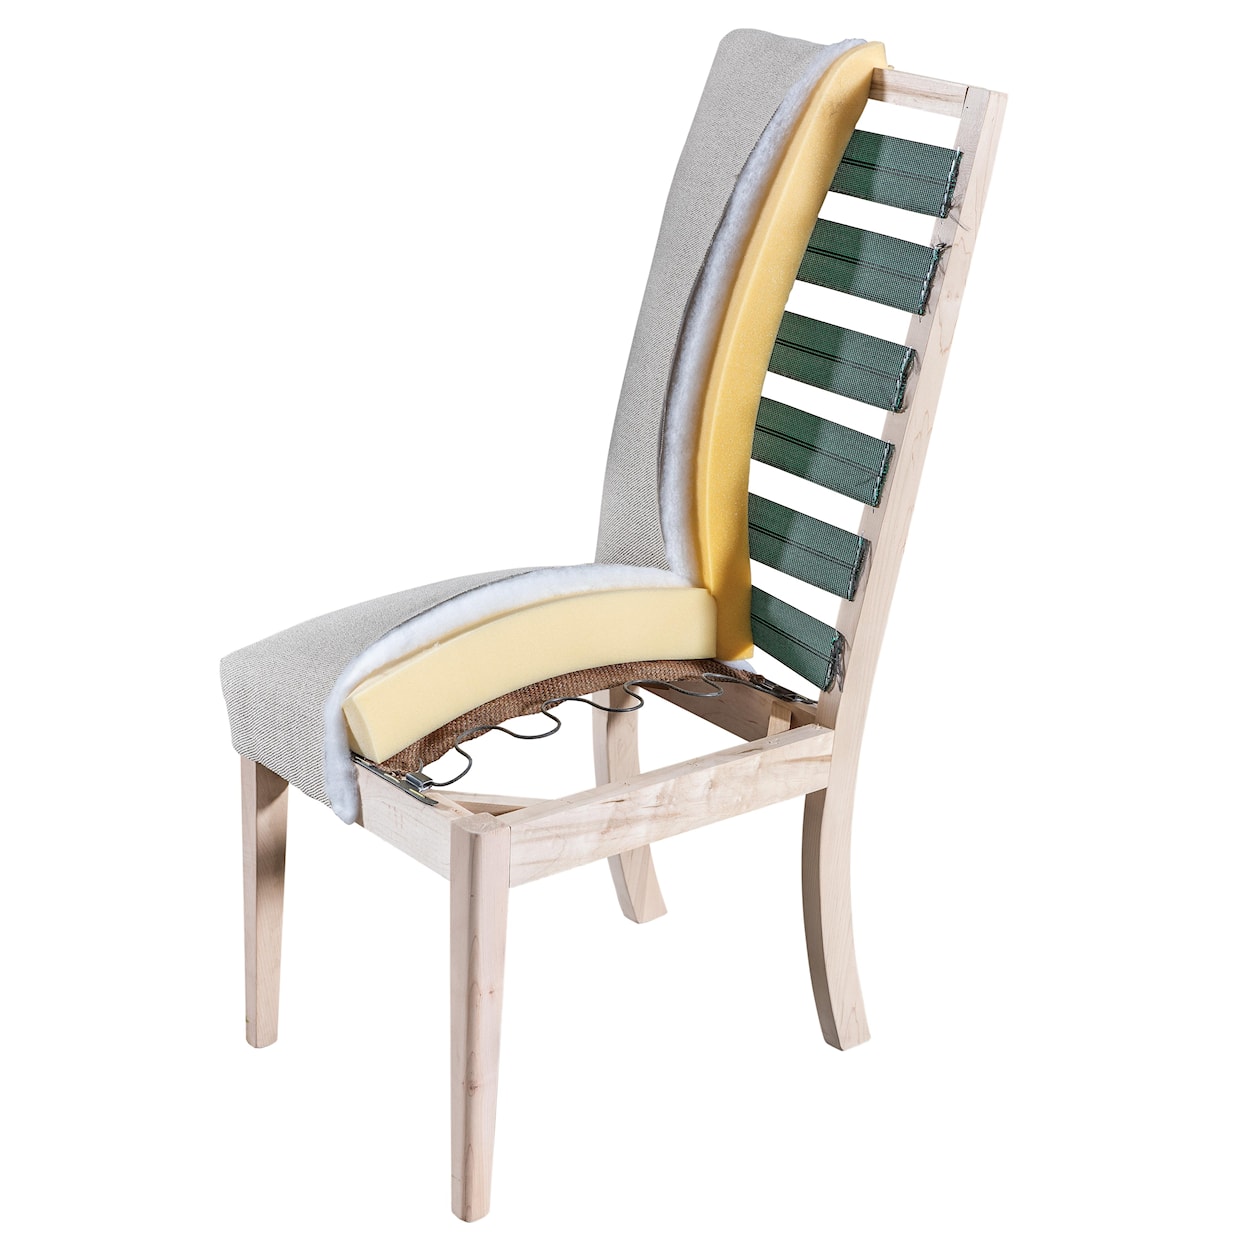 F&N Woodworking Corbin Customizable Solid Wood Arm Chair